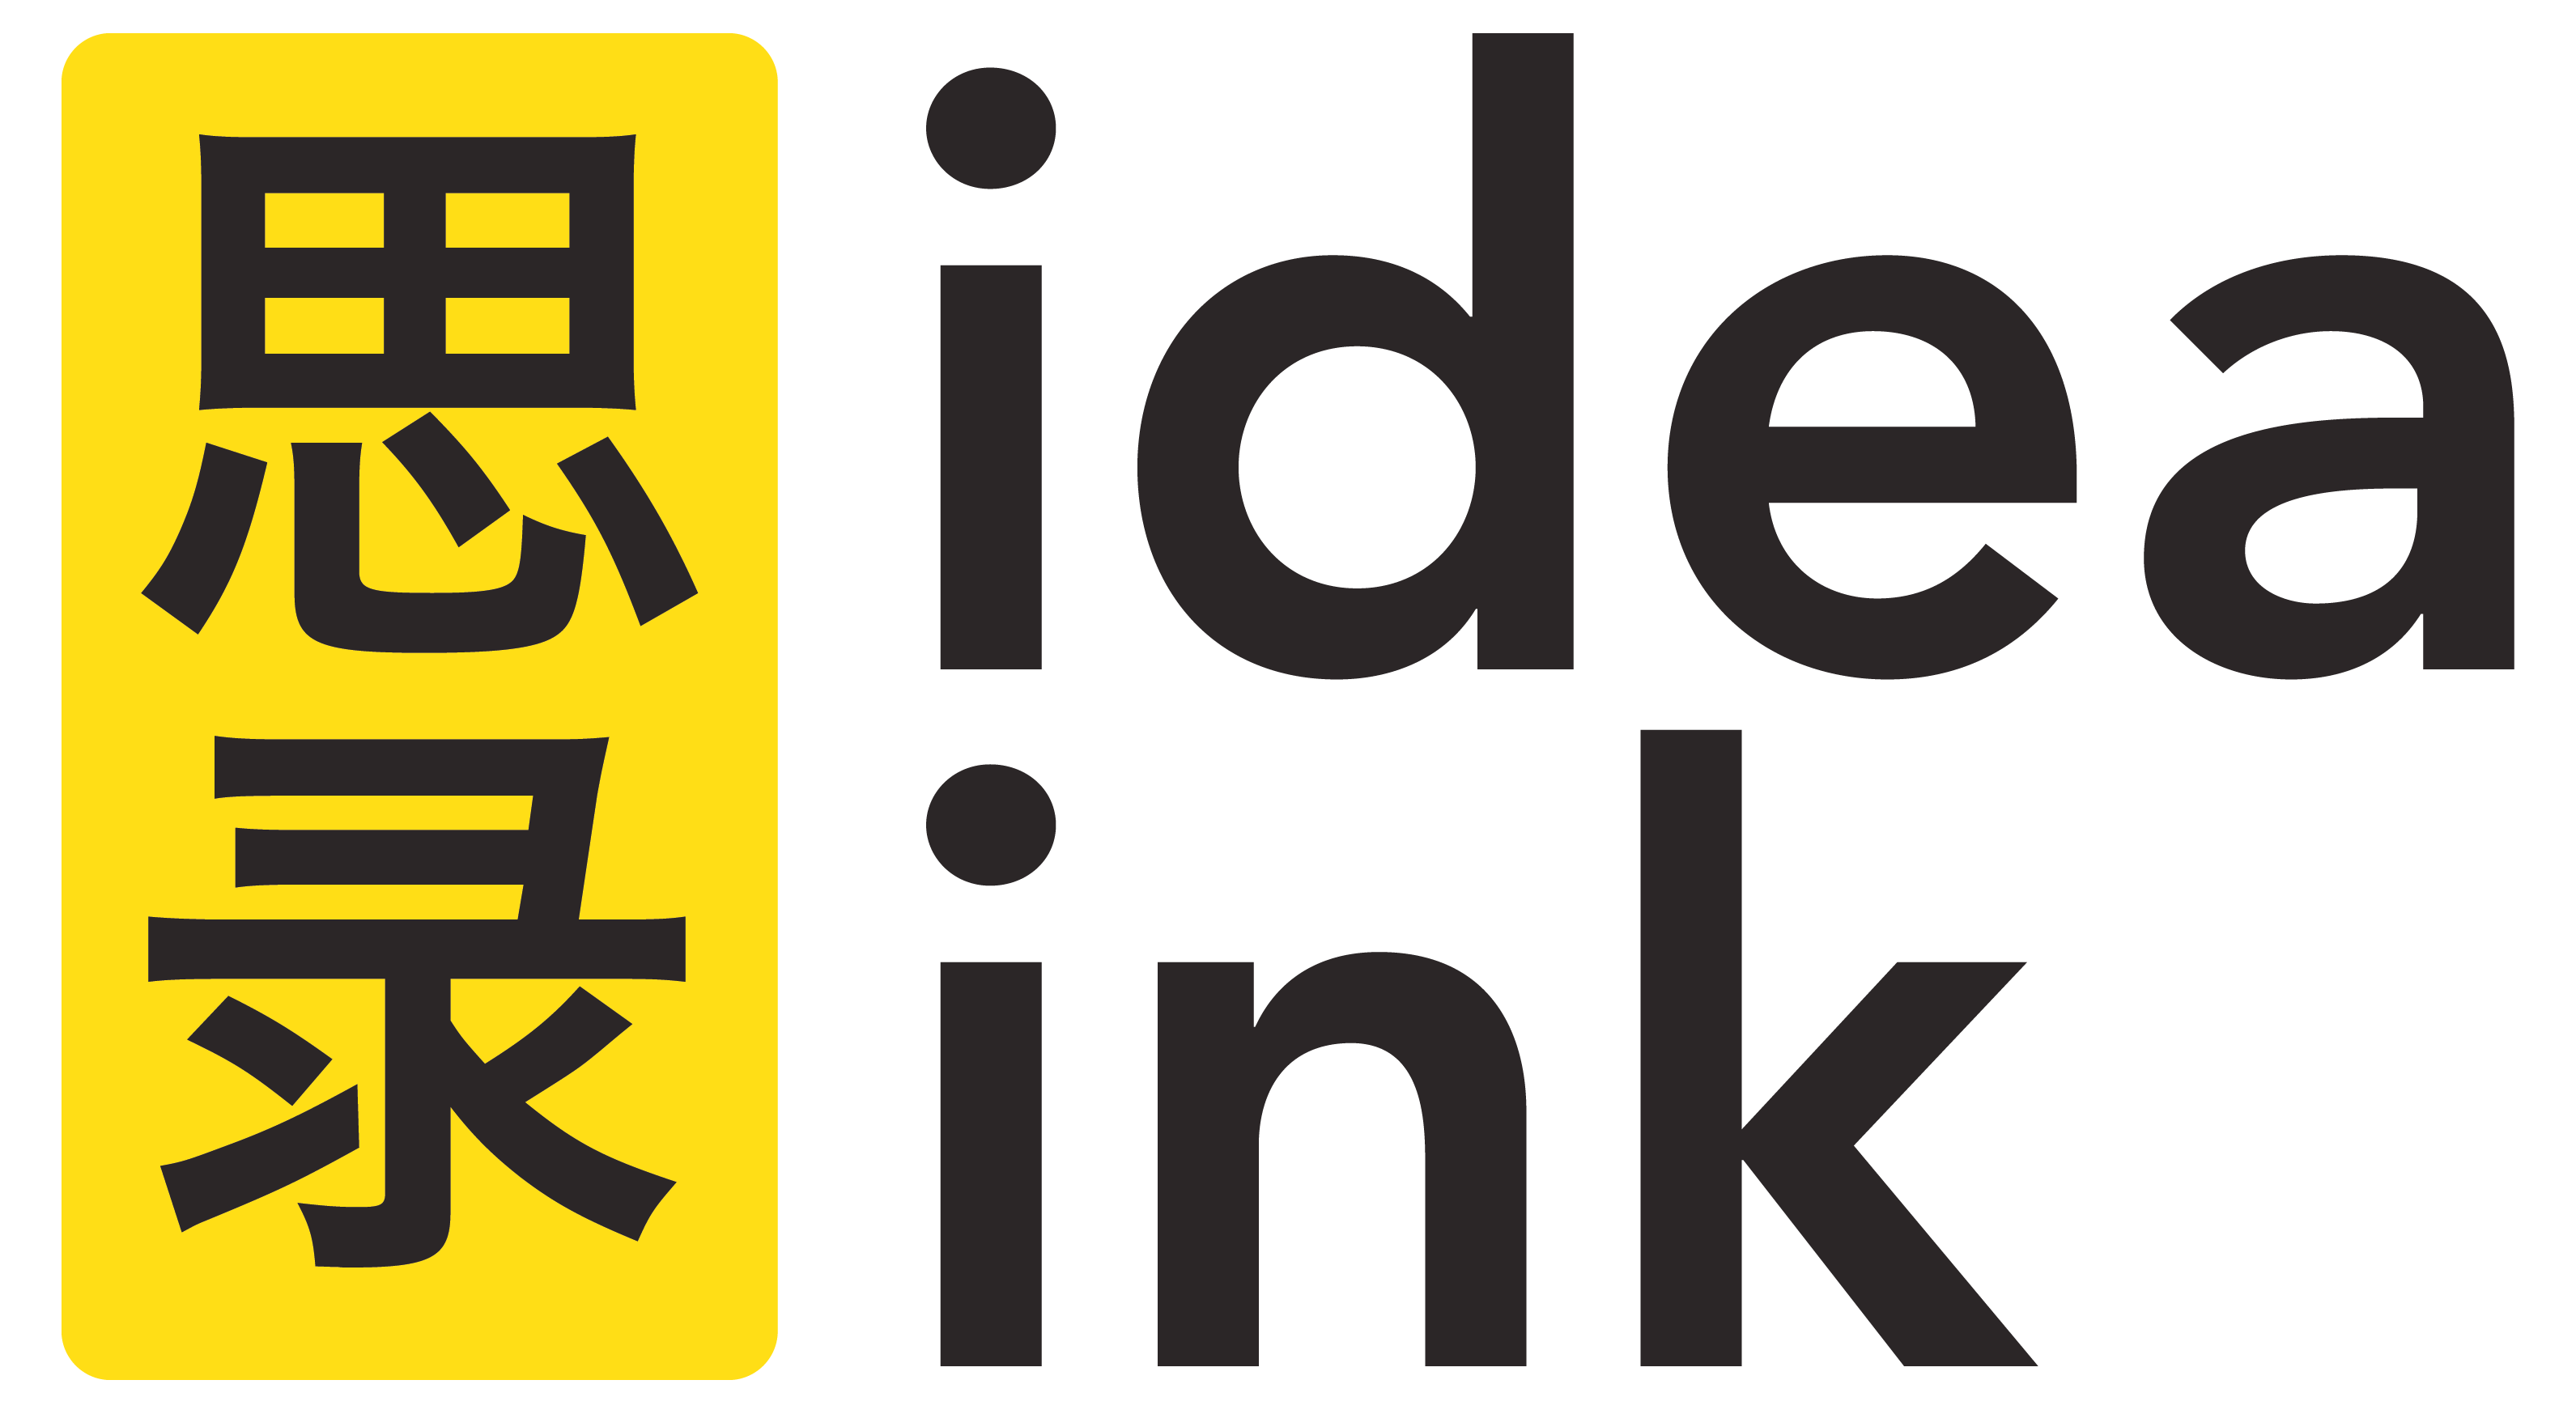 Idea Ink